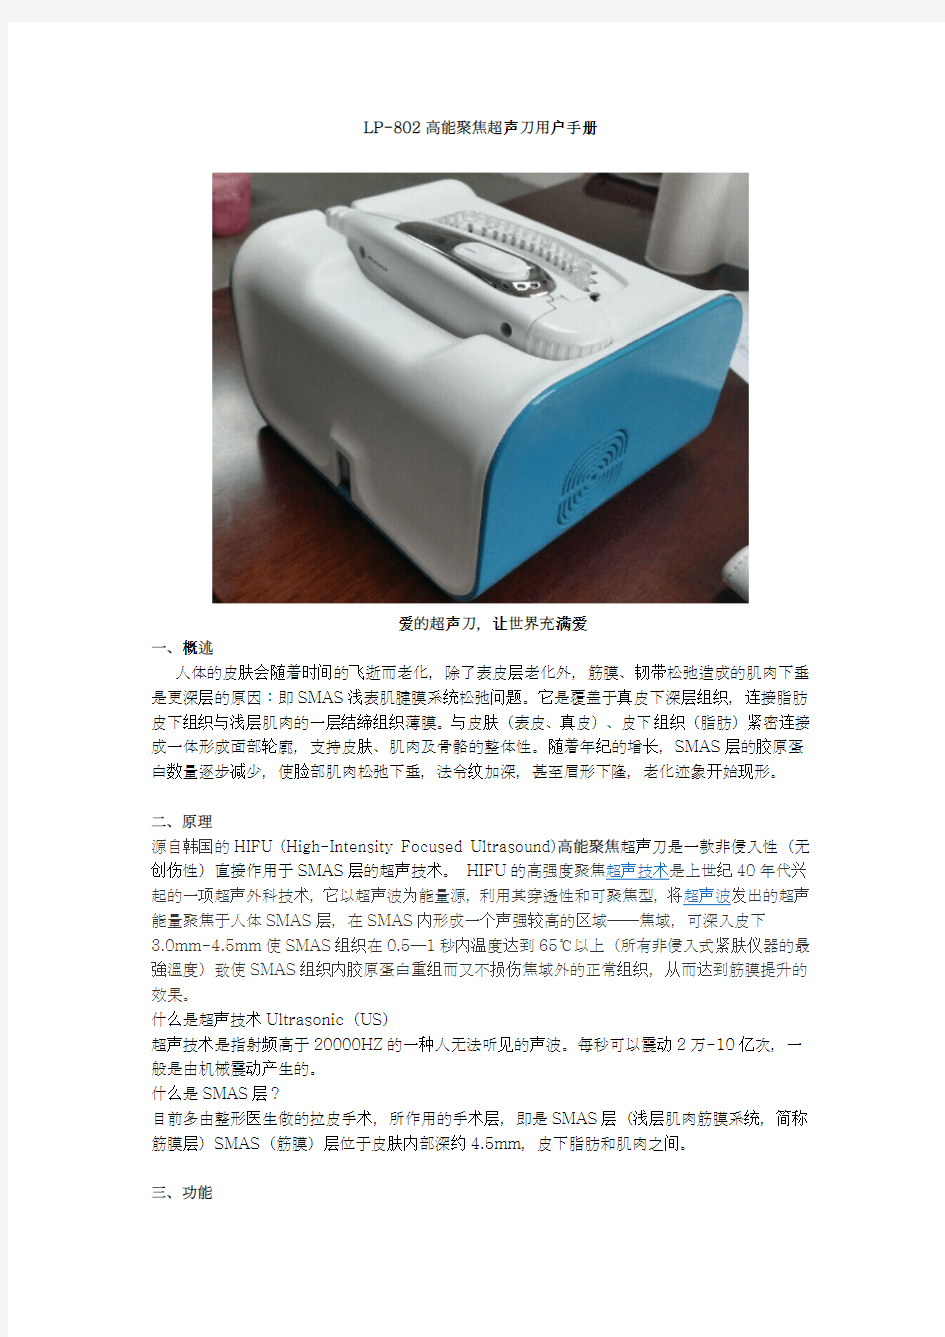 HIFU高能聚焦超声刀中文使用说明书